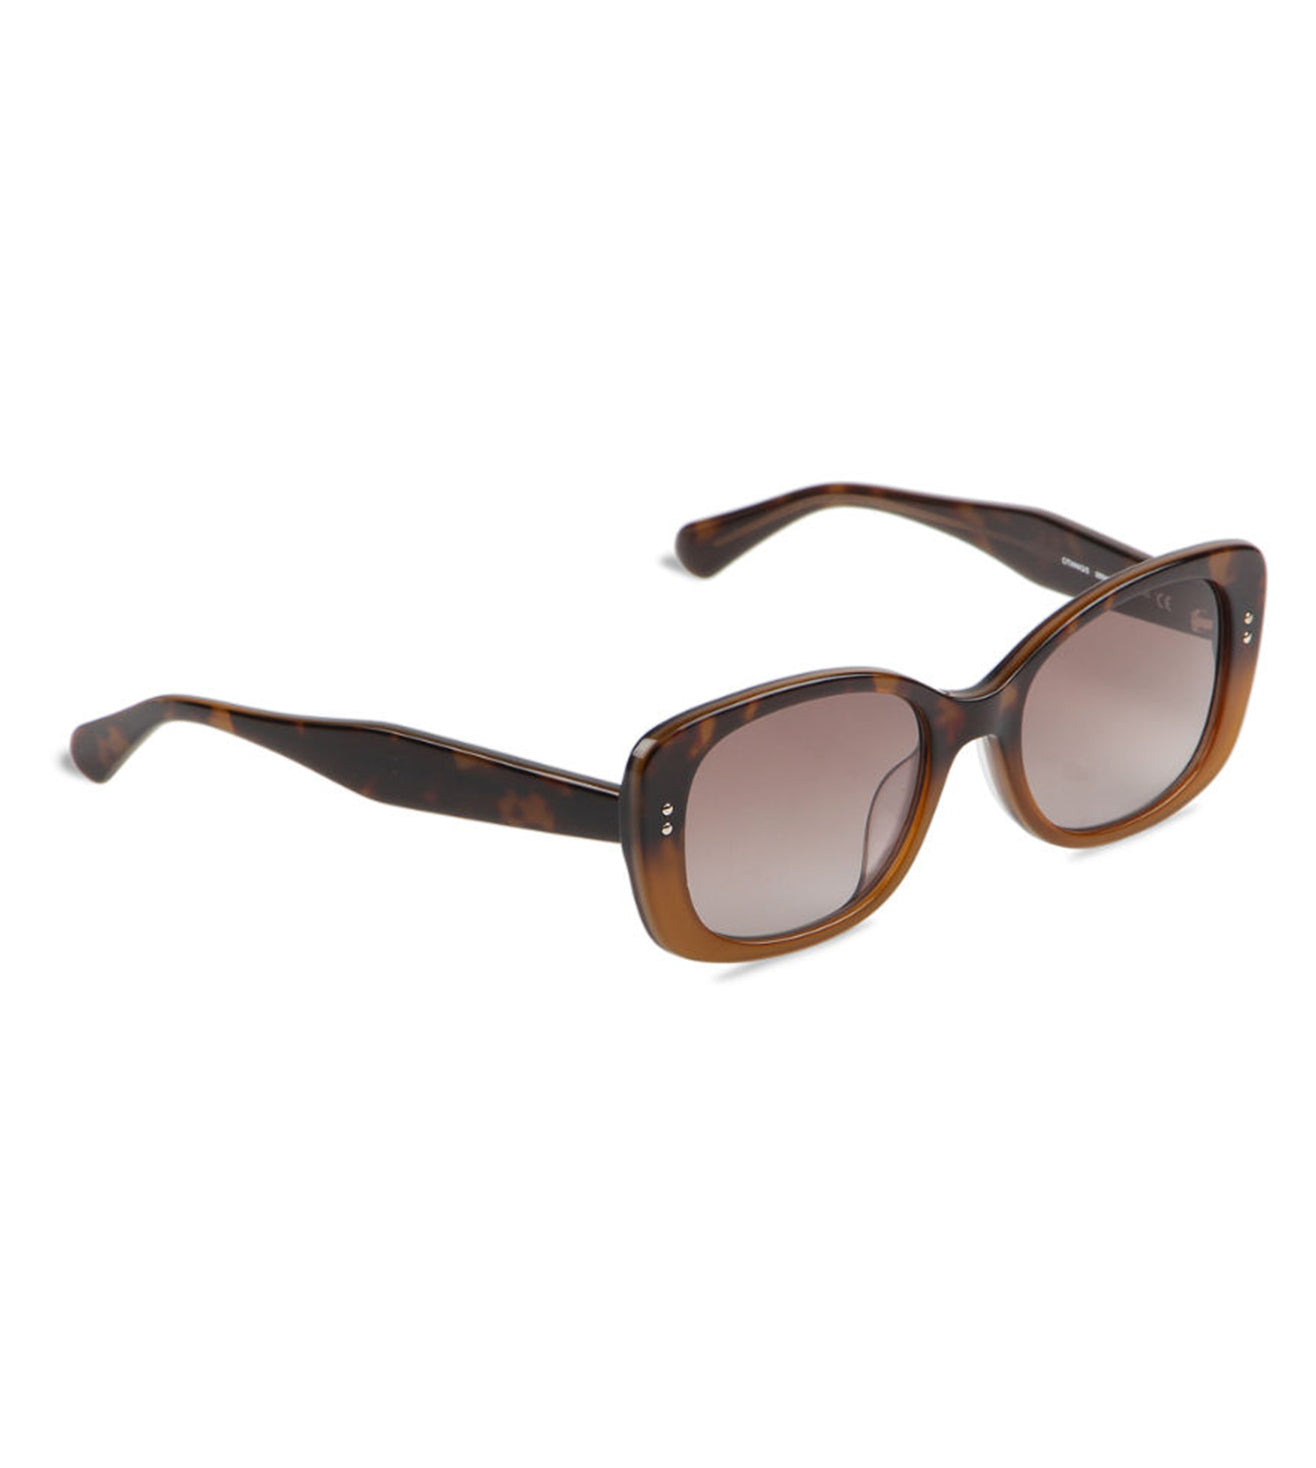 Kate Spade Women's Brown Rectangular Sunglasses